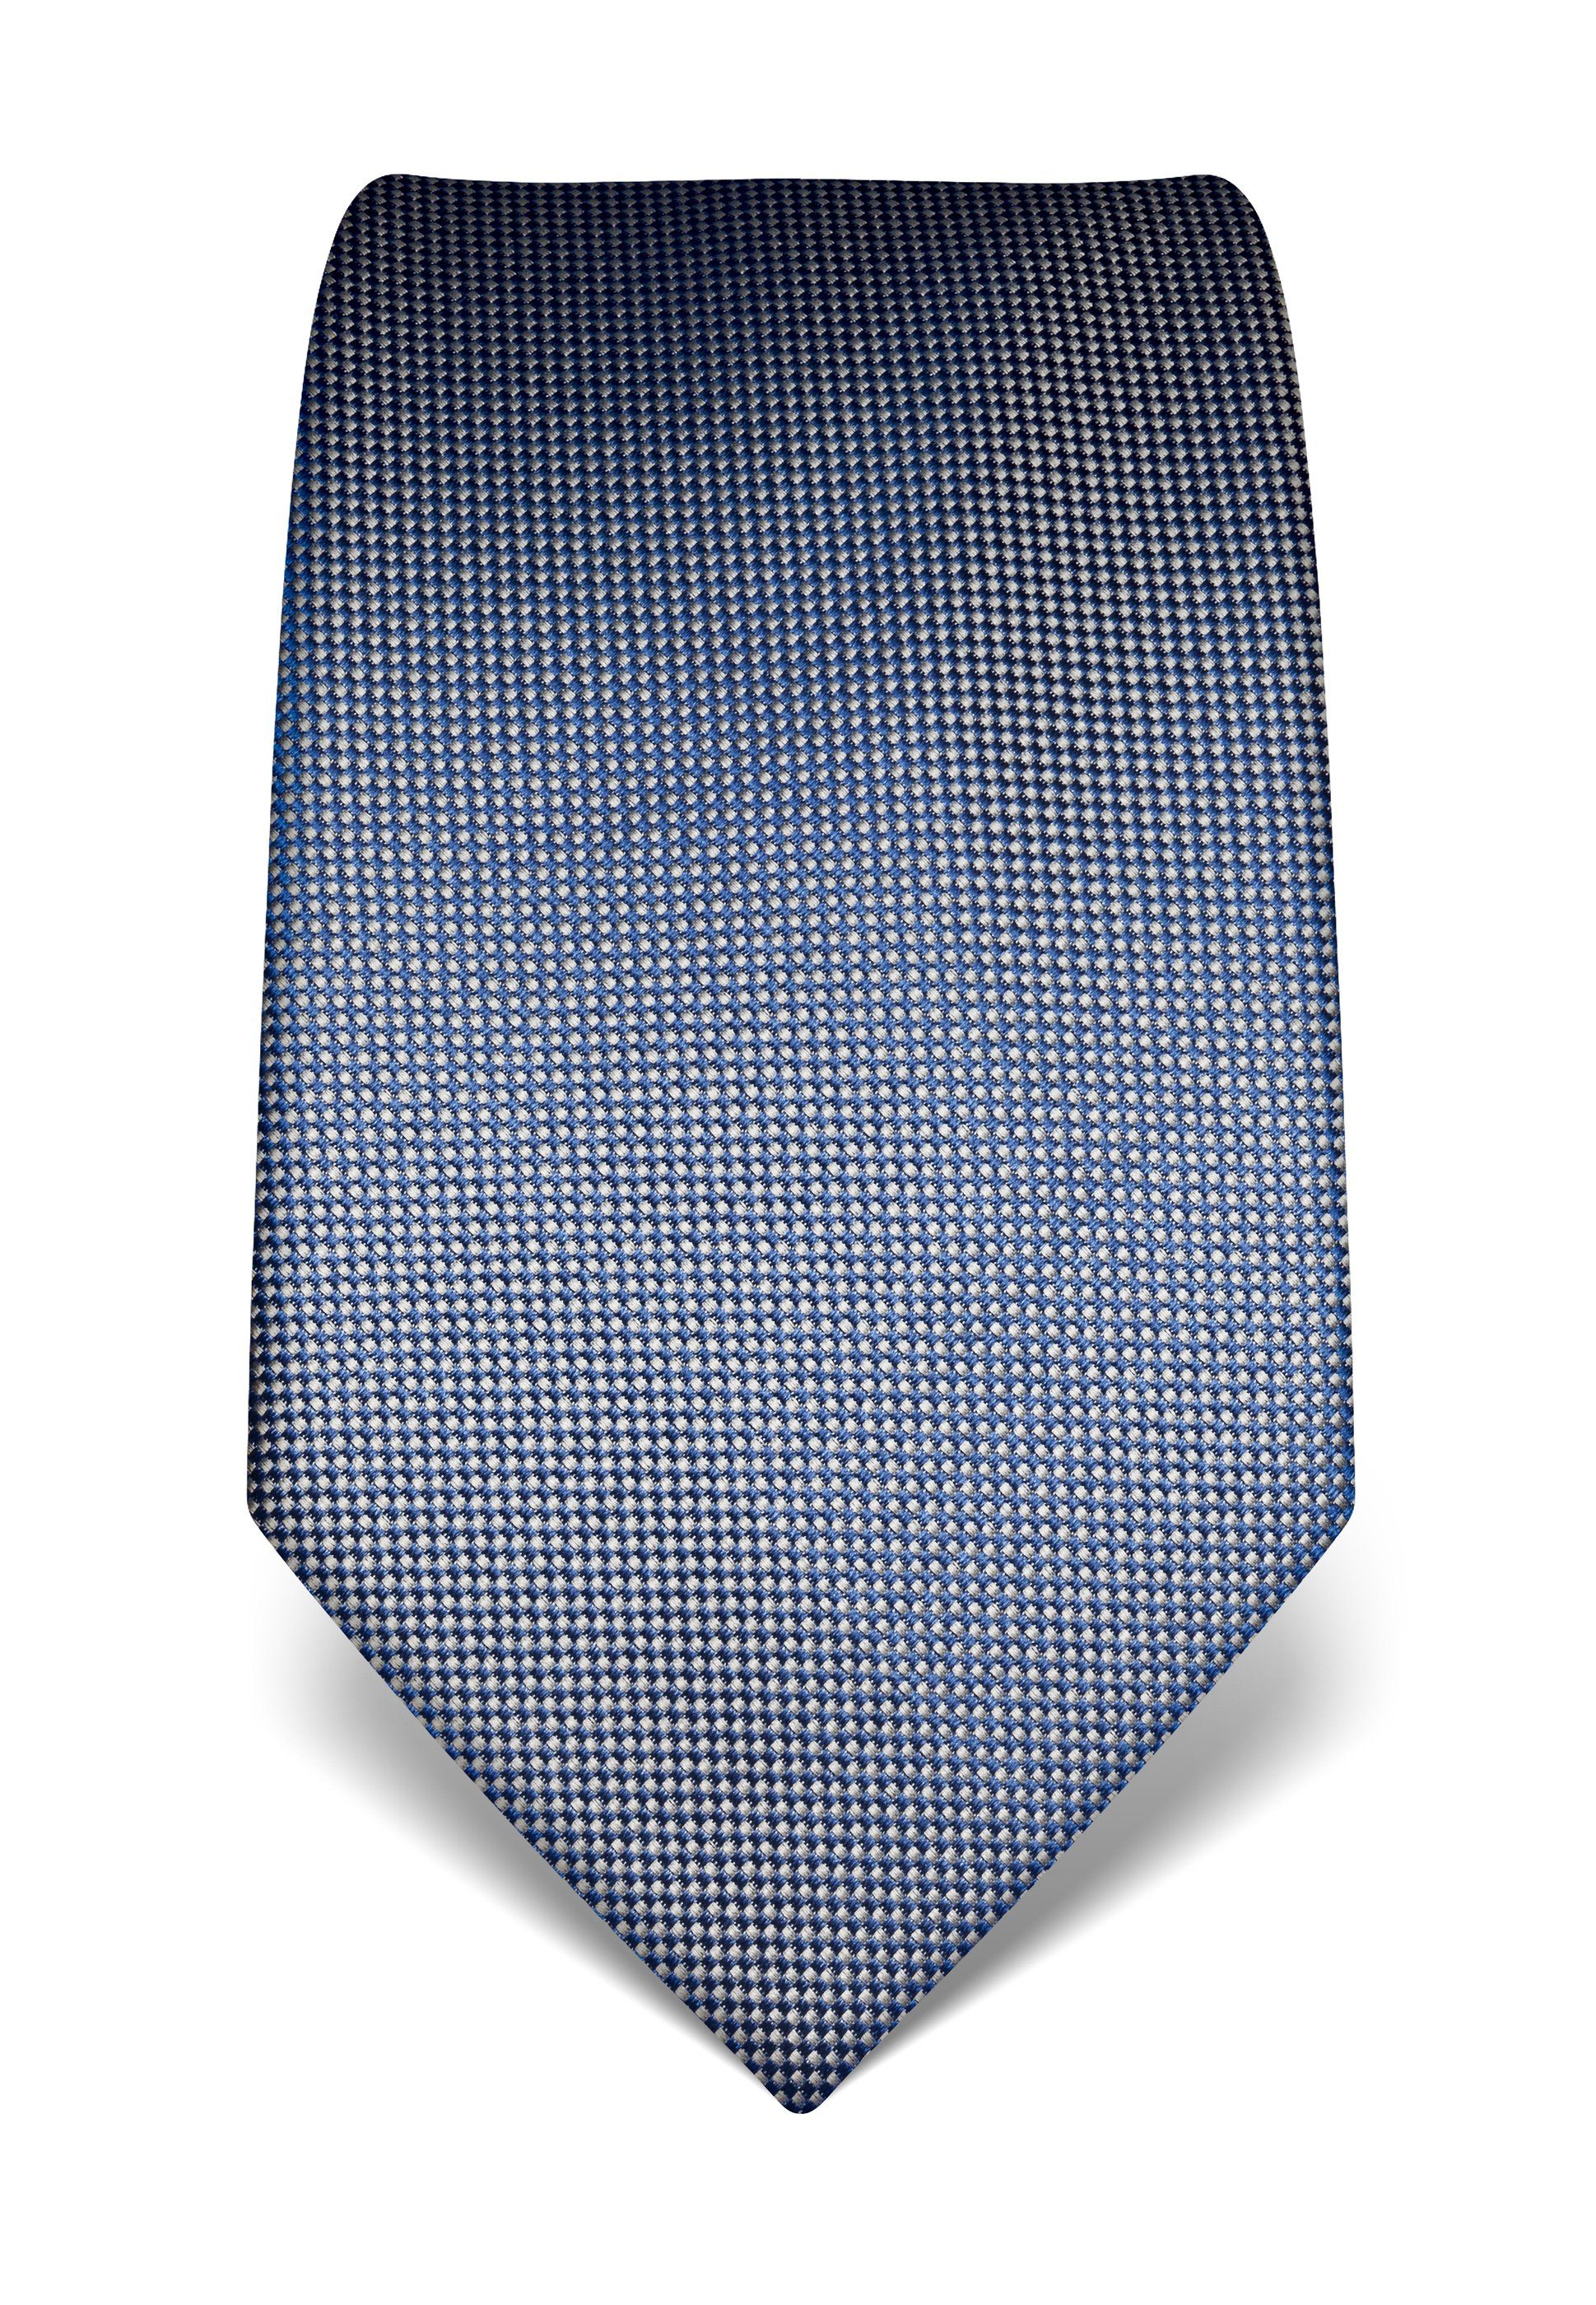 Boretti Krawatte Vincenzo strukturiert graublau